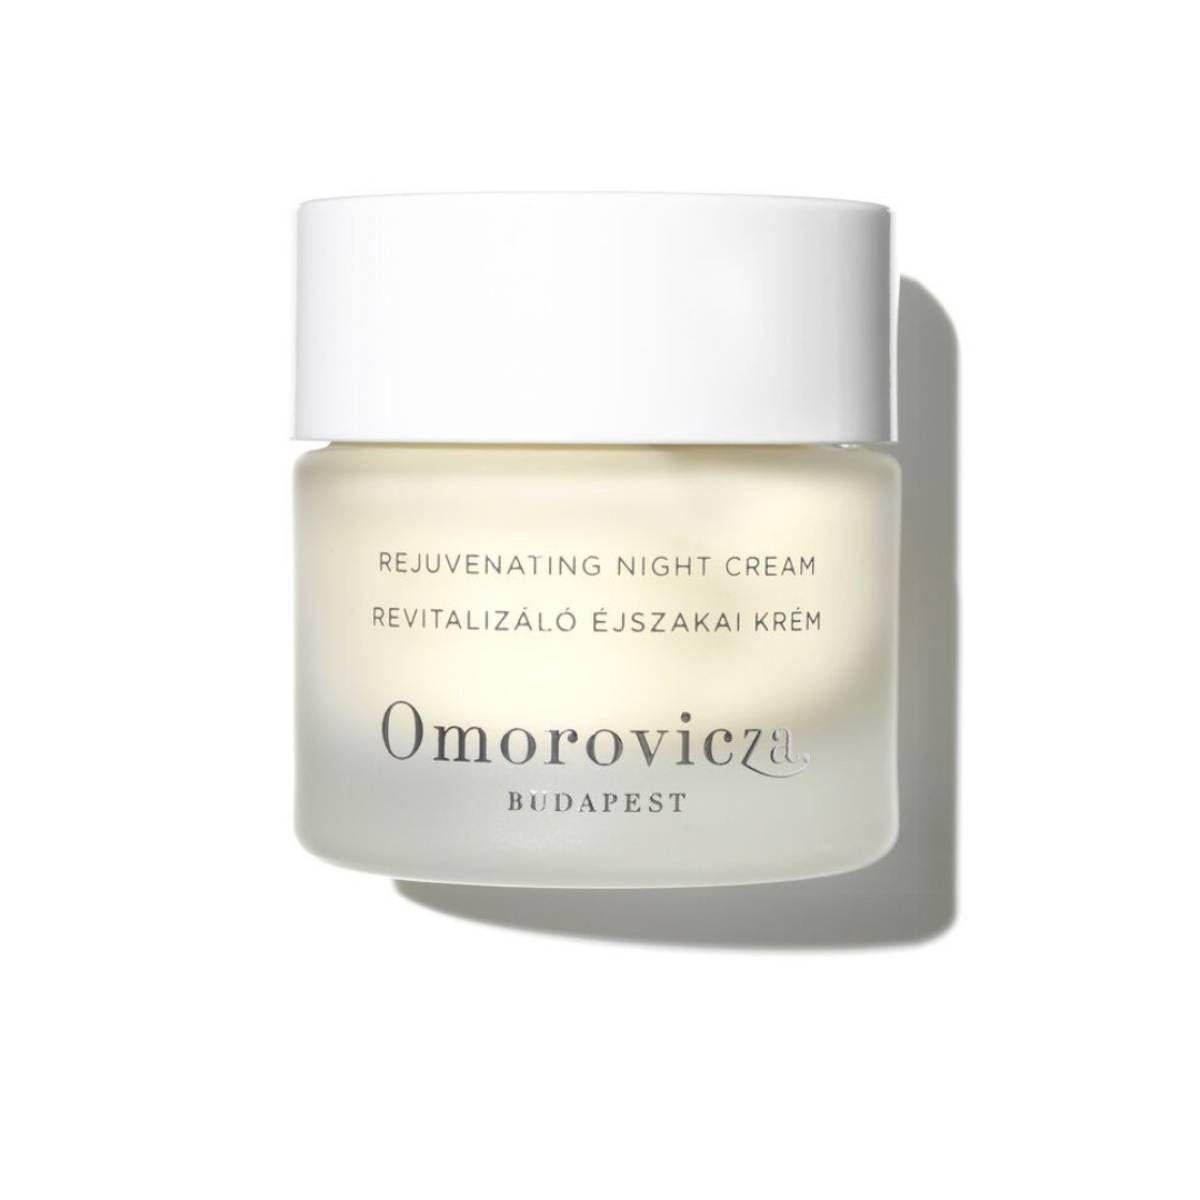 Rejuvenating Night Cream, de Omorovicza